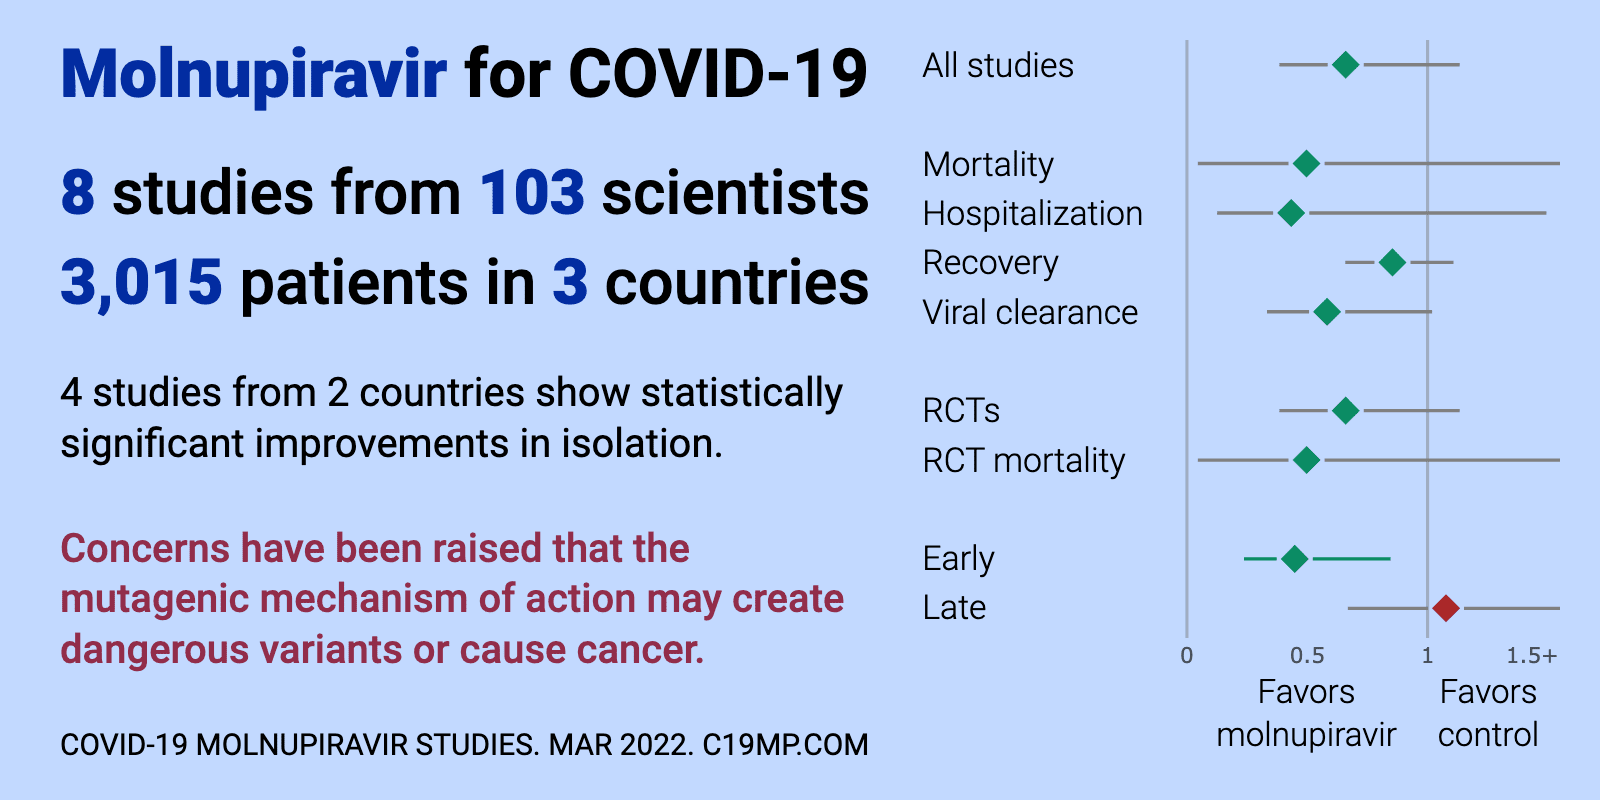 Molnupiravir for COVID-19